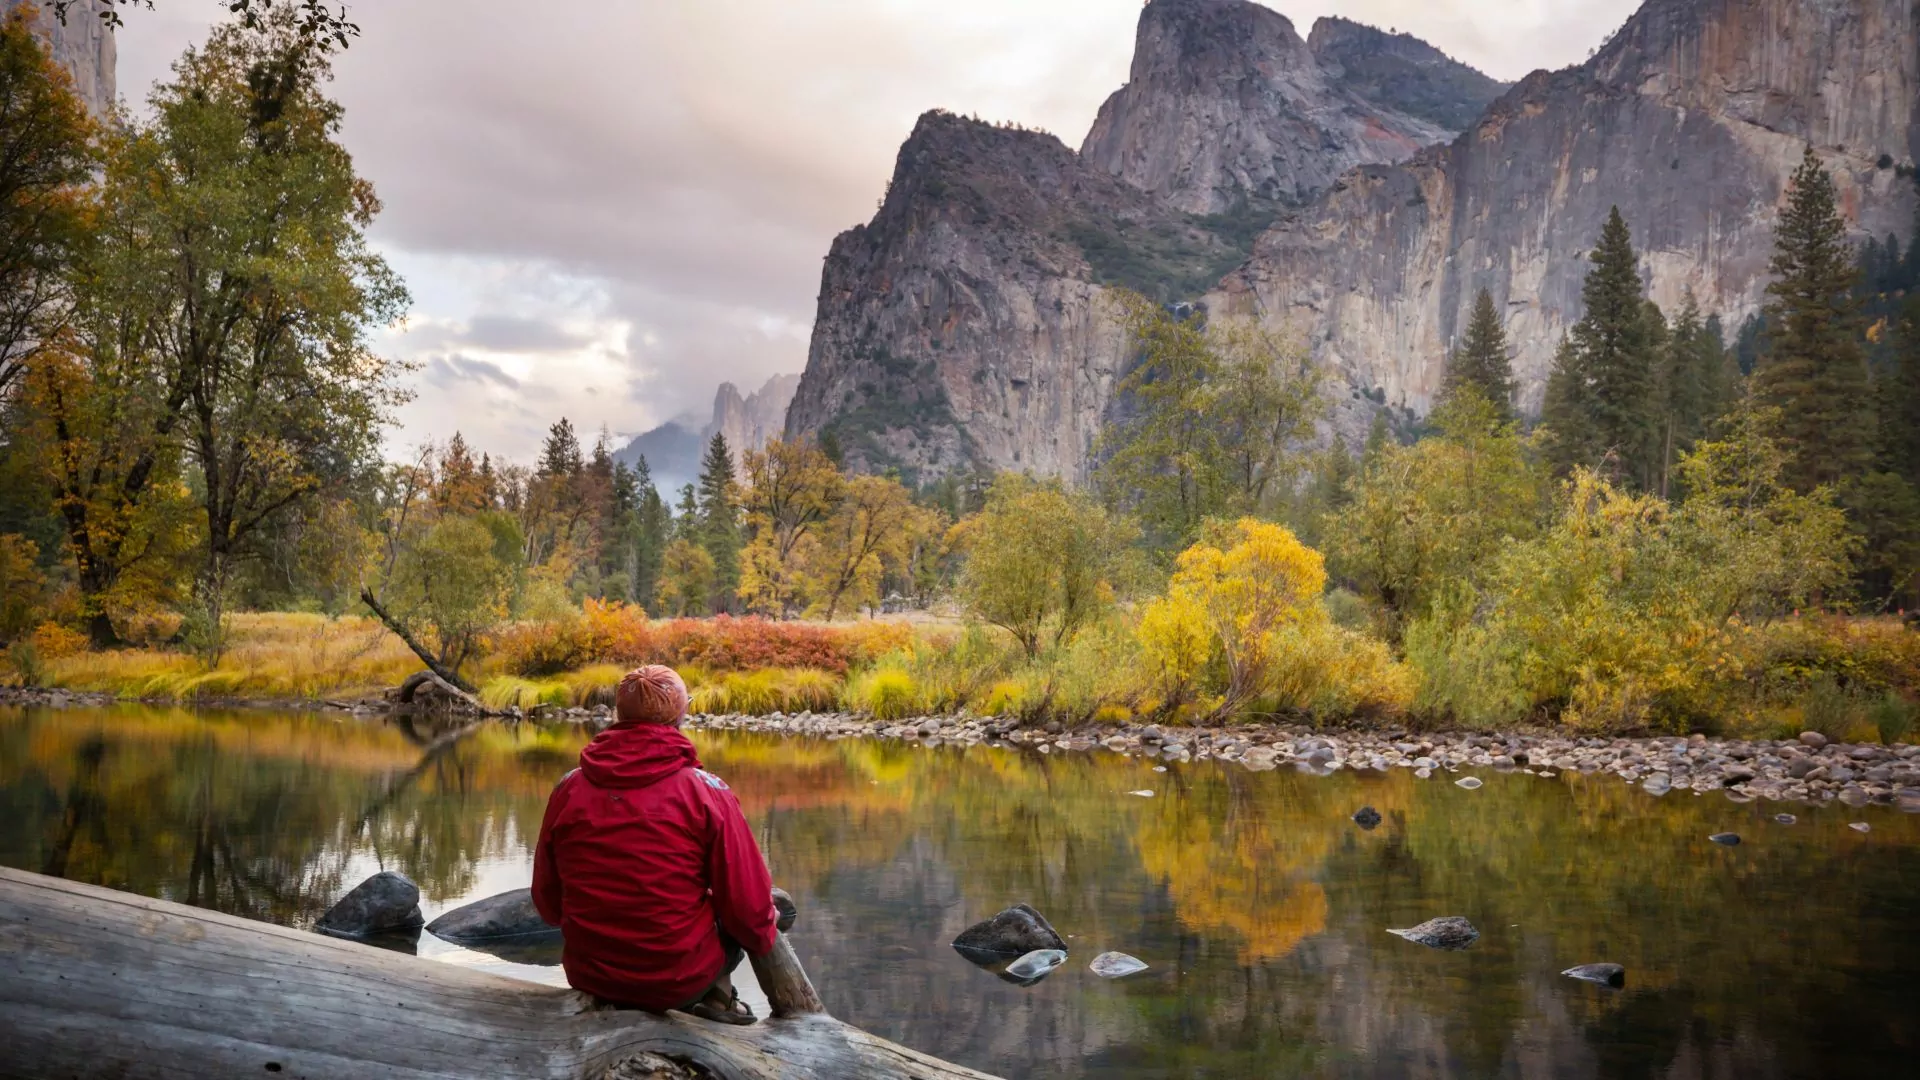 A visitor enjoys views of Yosemite National Park